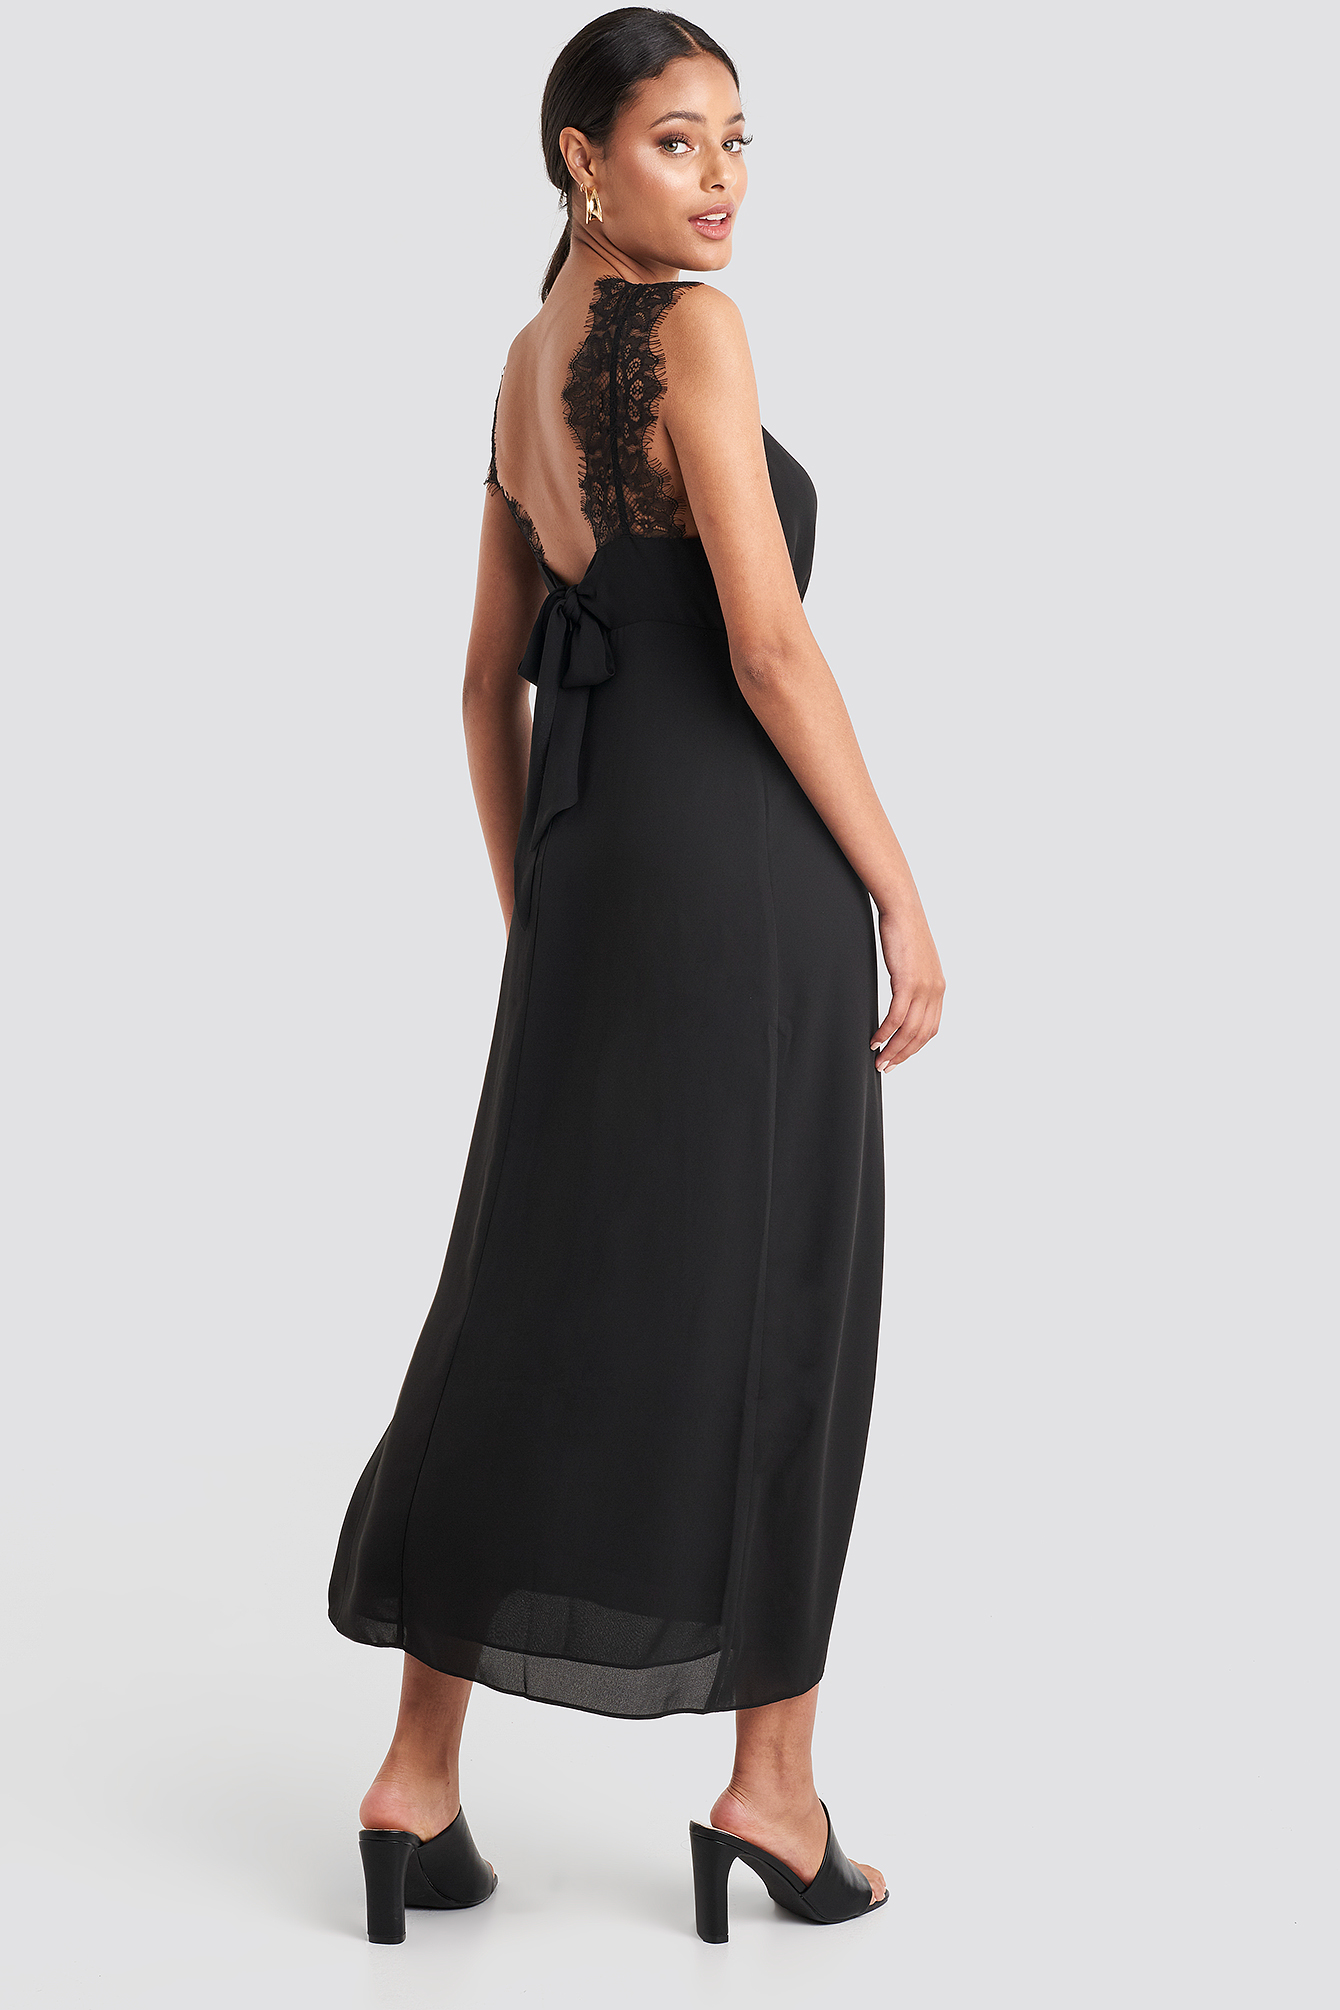 Black Thin Strap Lace Back Dress